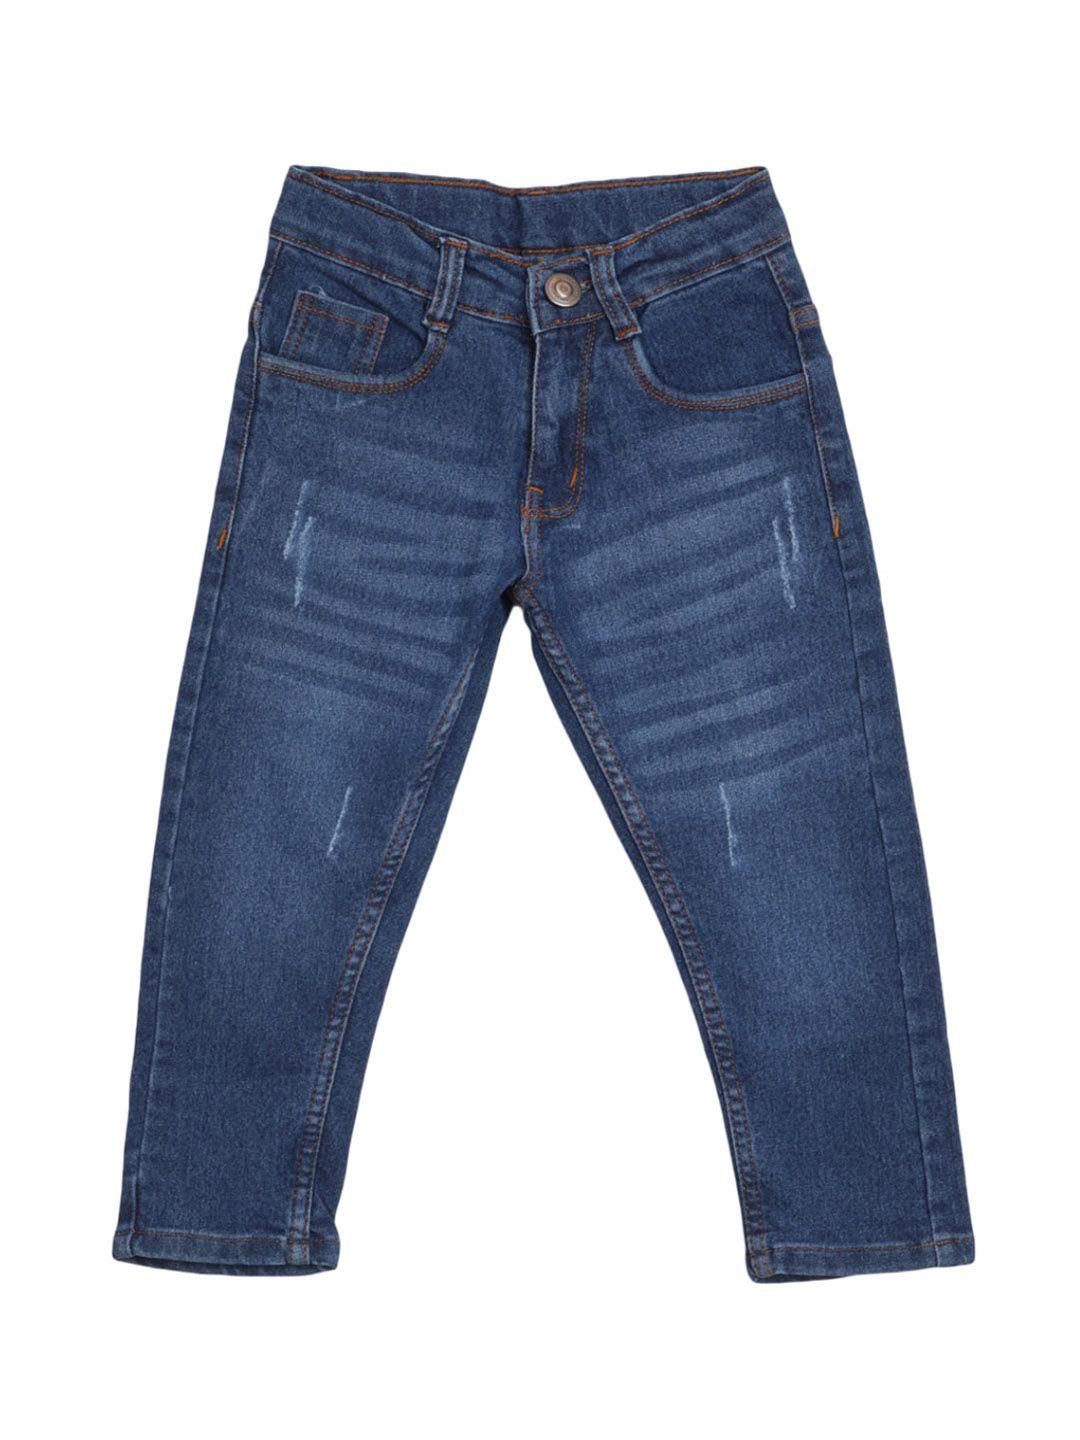 v-mart-boys-low-distress-light-fade-cotton-jeans